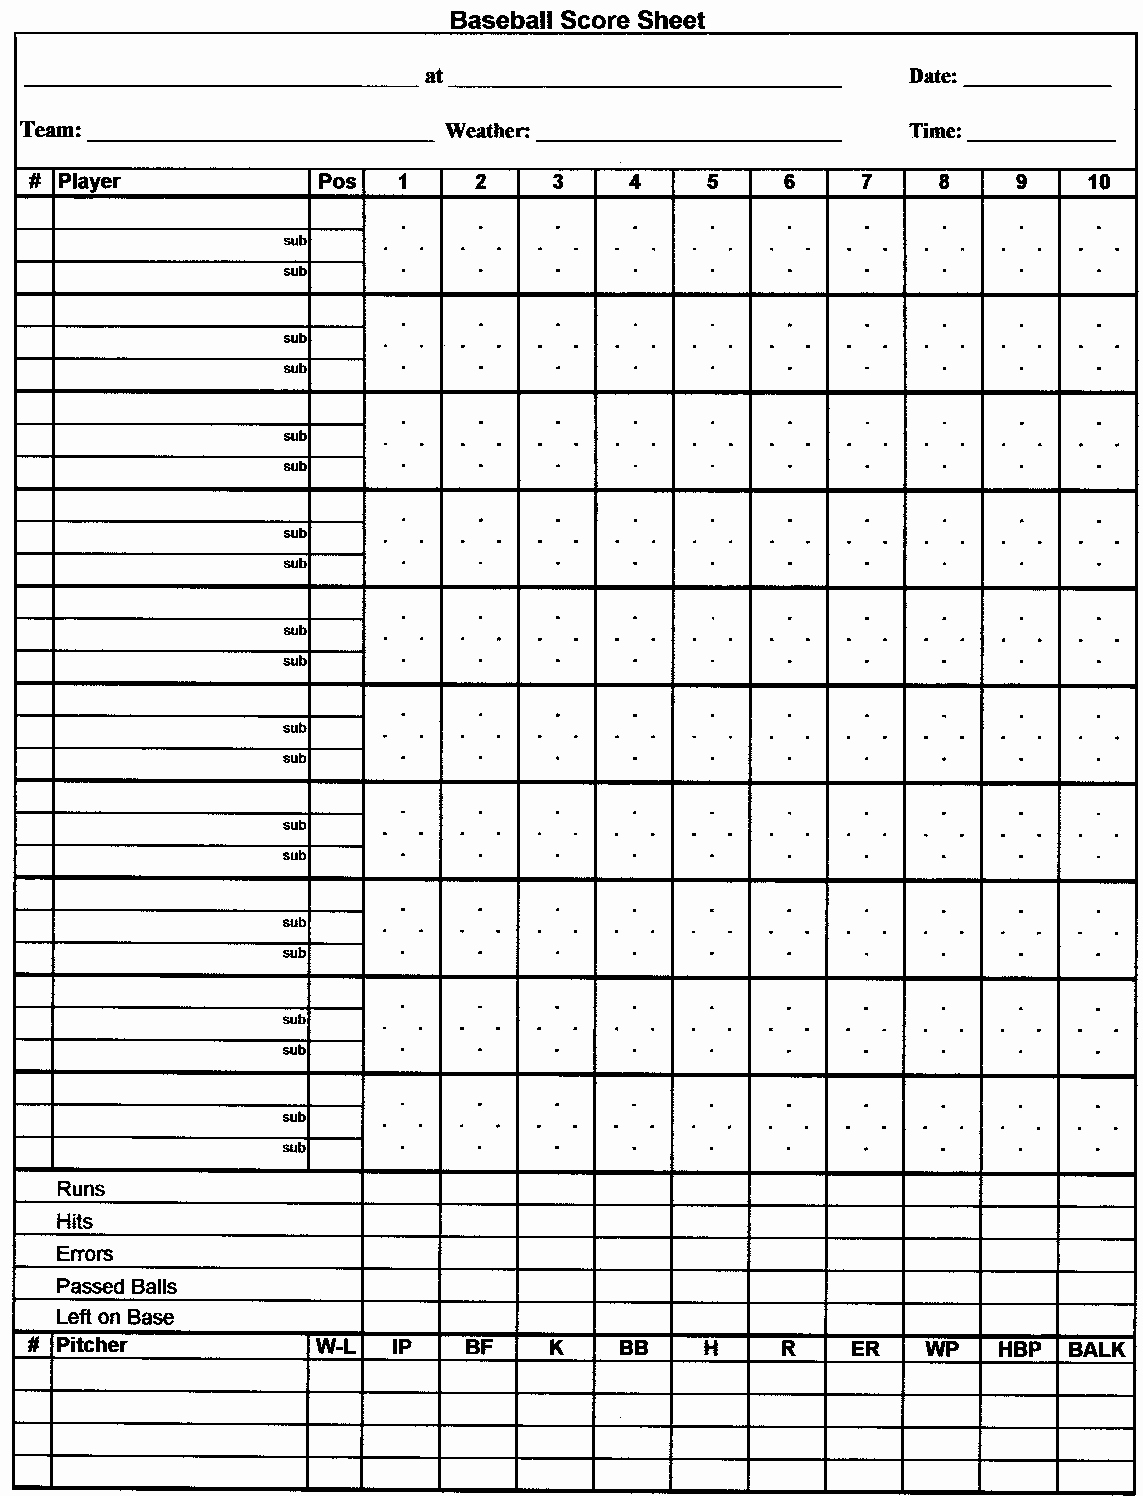 Baseball Score Sheet Template New Baseball Score Sheet